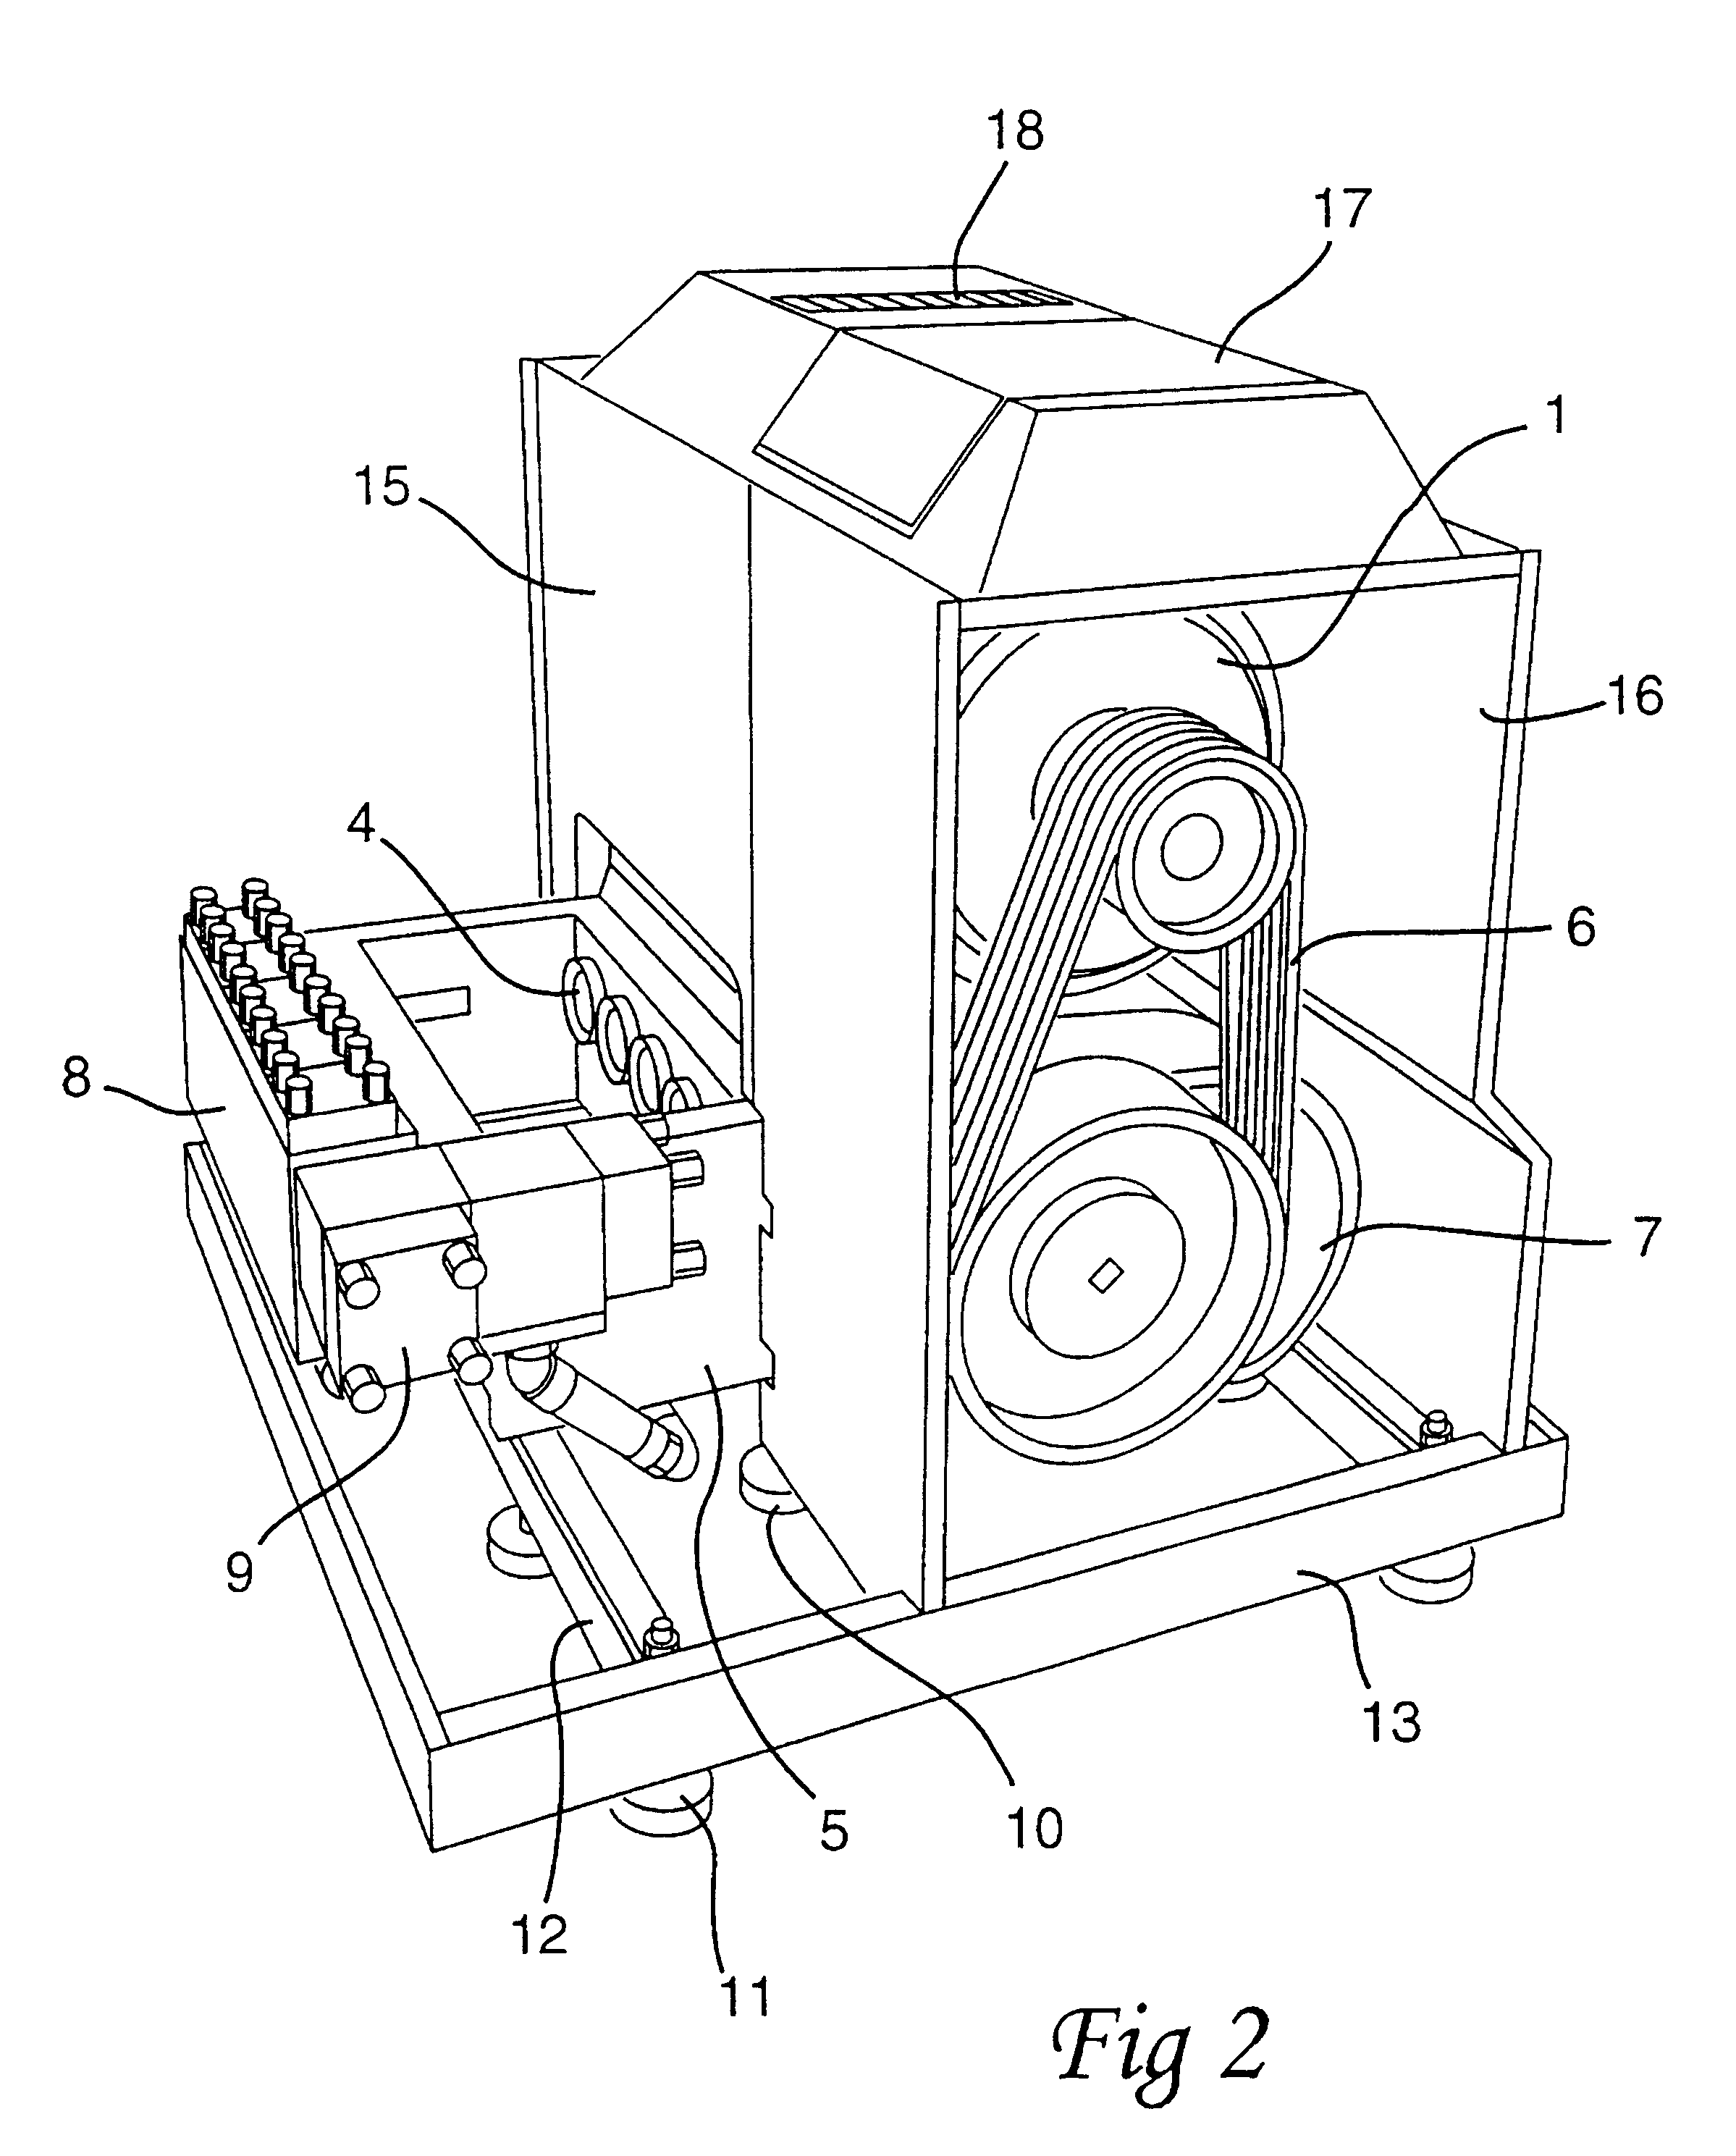 Apparatus for high pressure pumping or homogenizing liquids